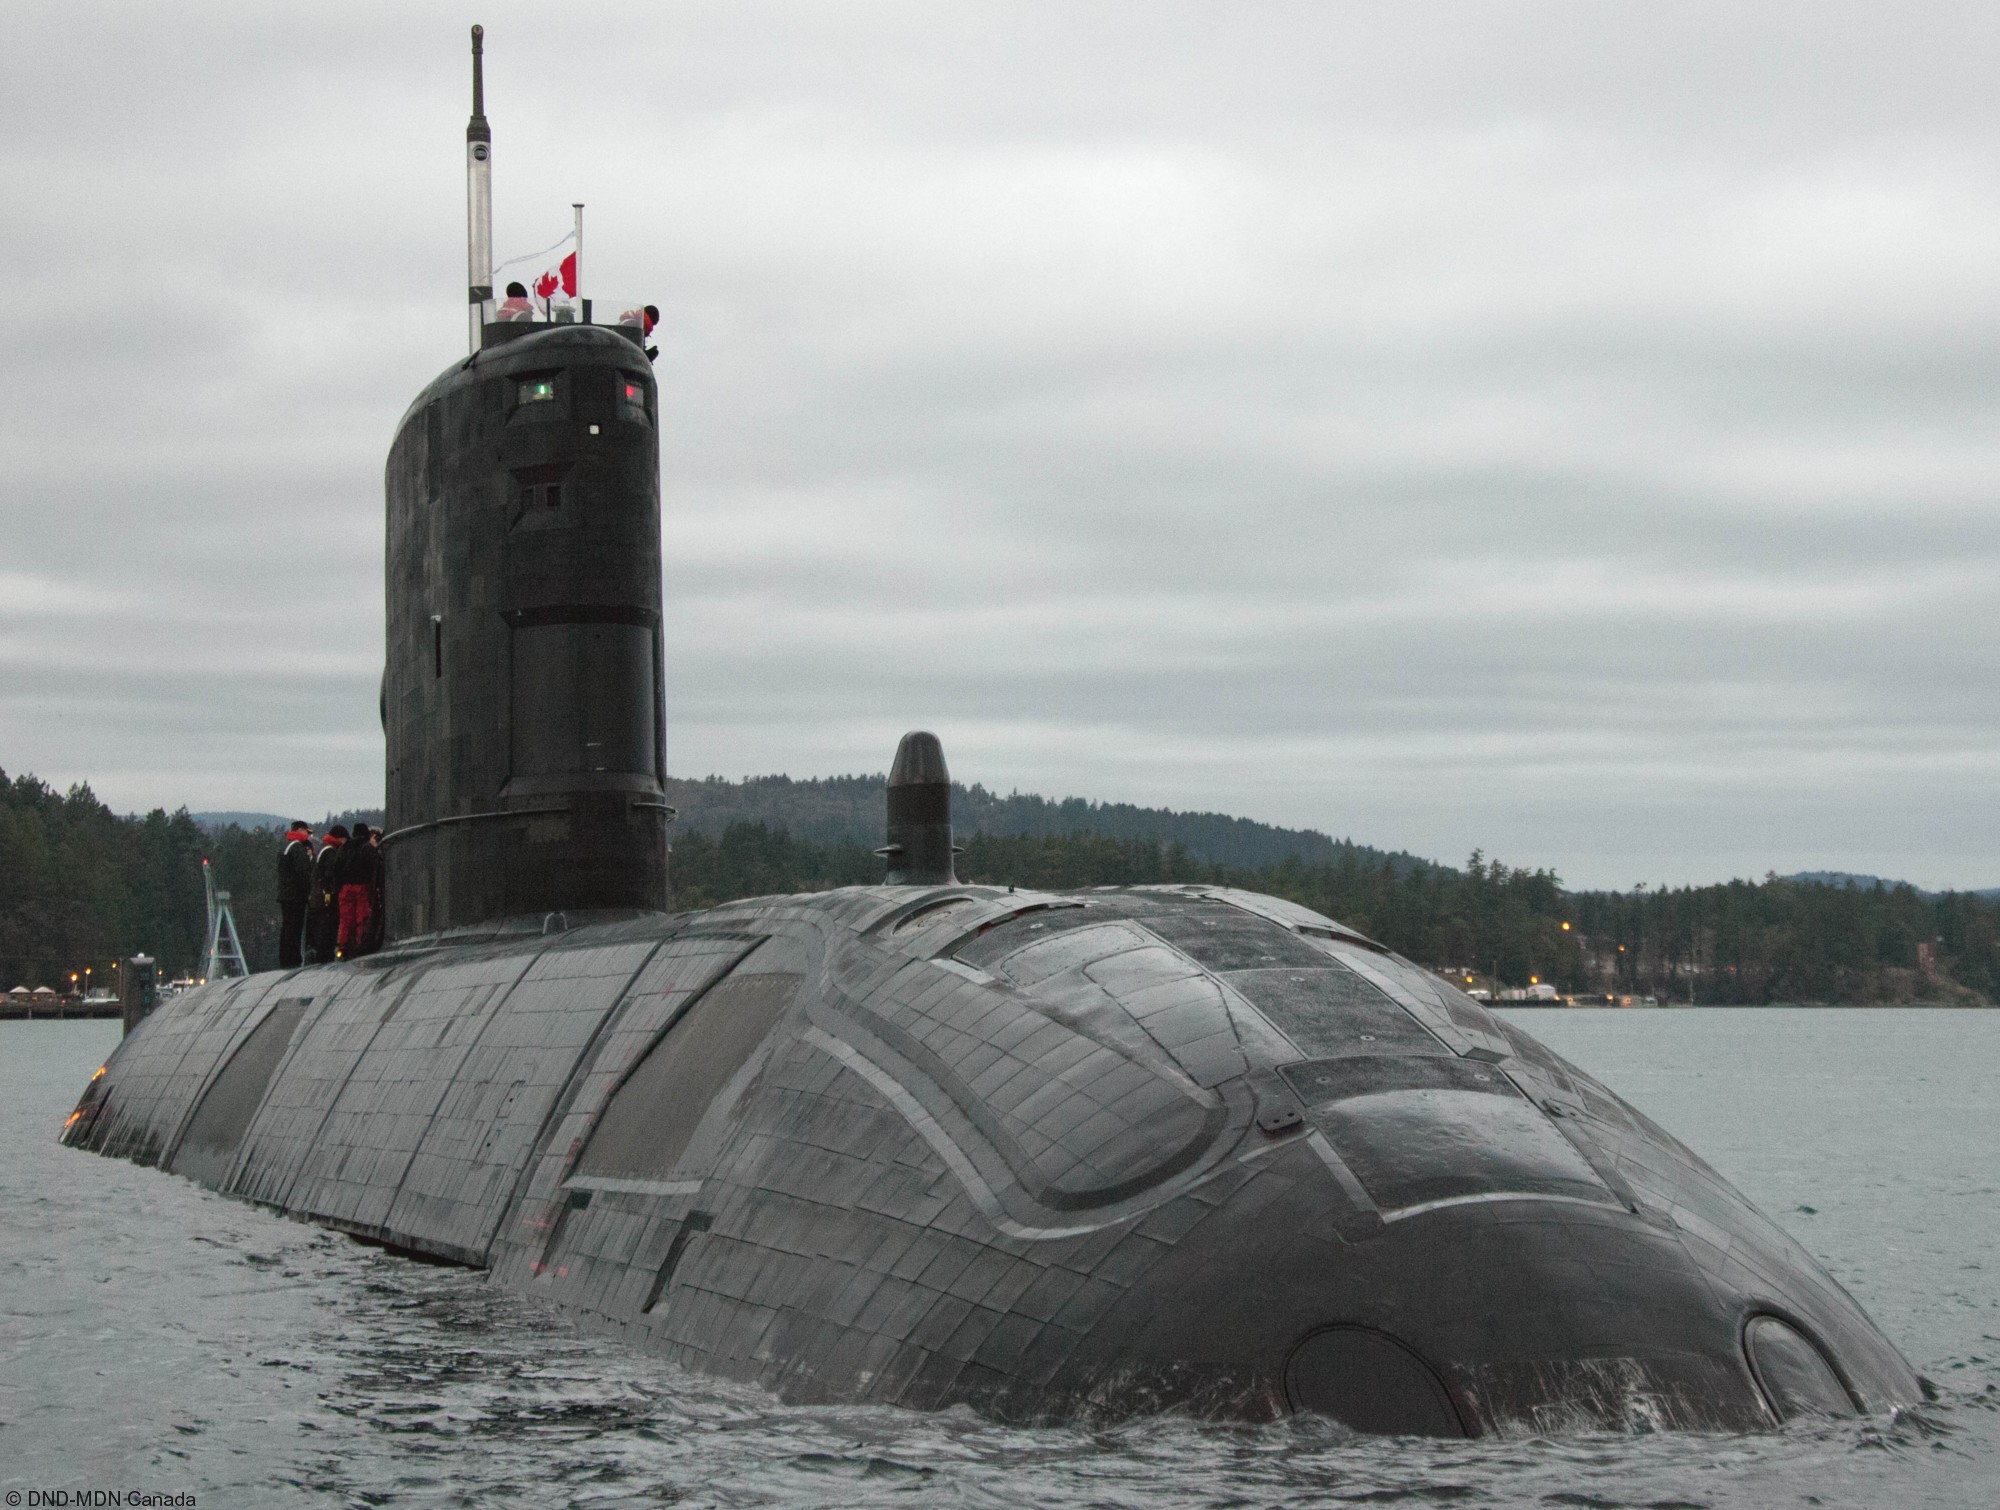 ssk-876 hmcs victoria upholder class attack submarine hunter killer ncsm royal canadian navy 27